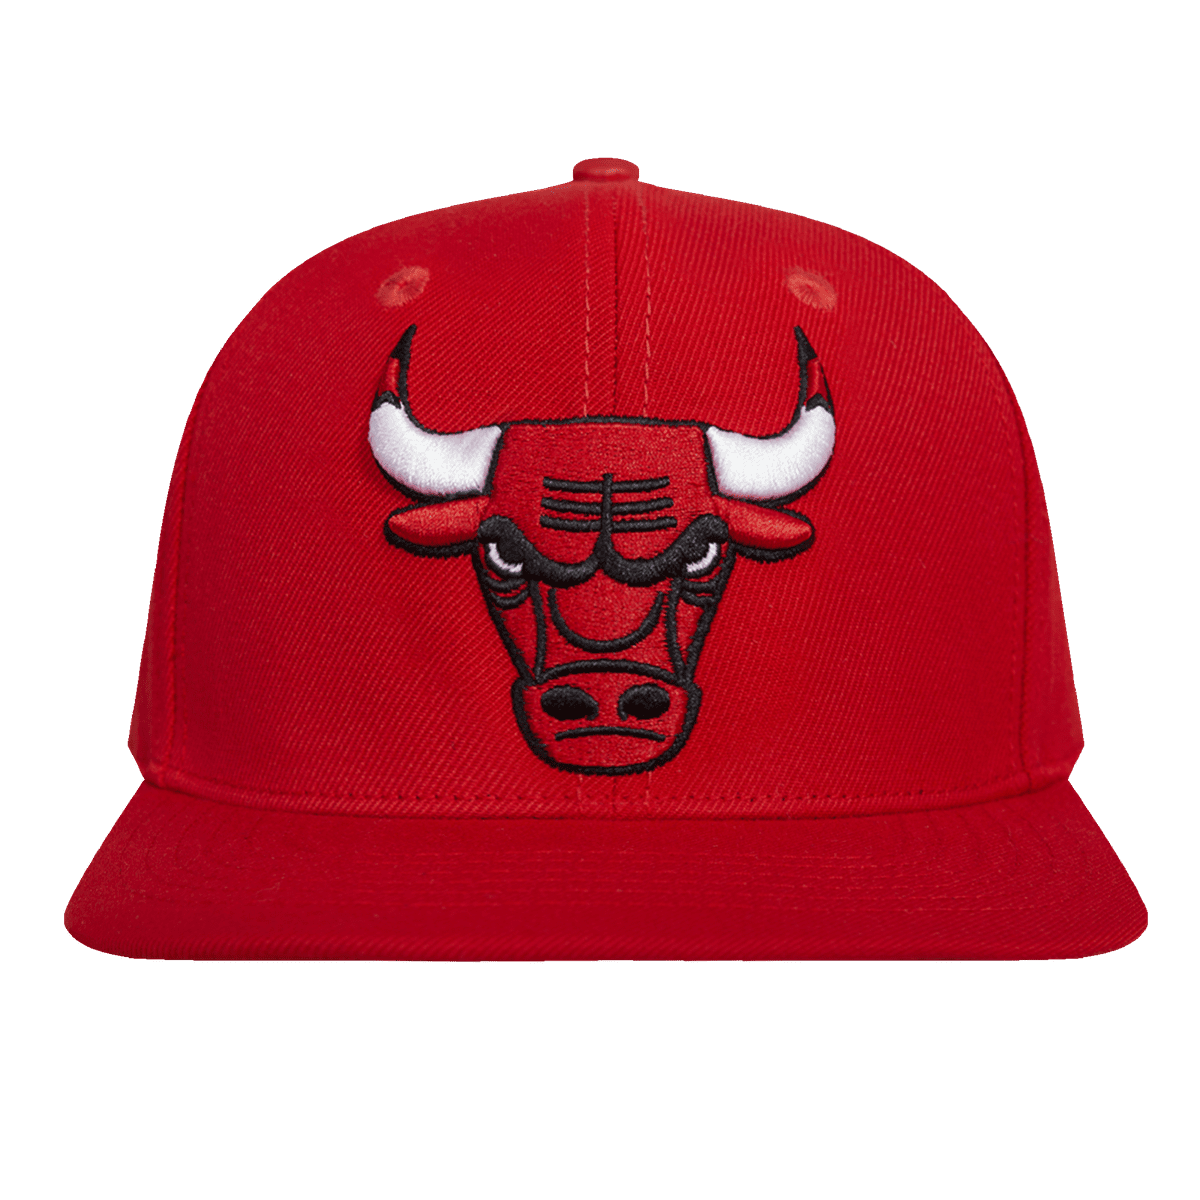 Pro Standard Chicago Bulls Snapback Hat